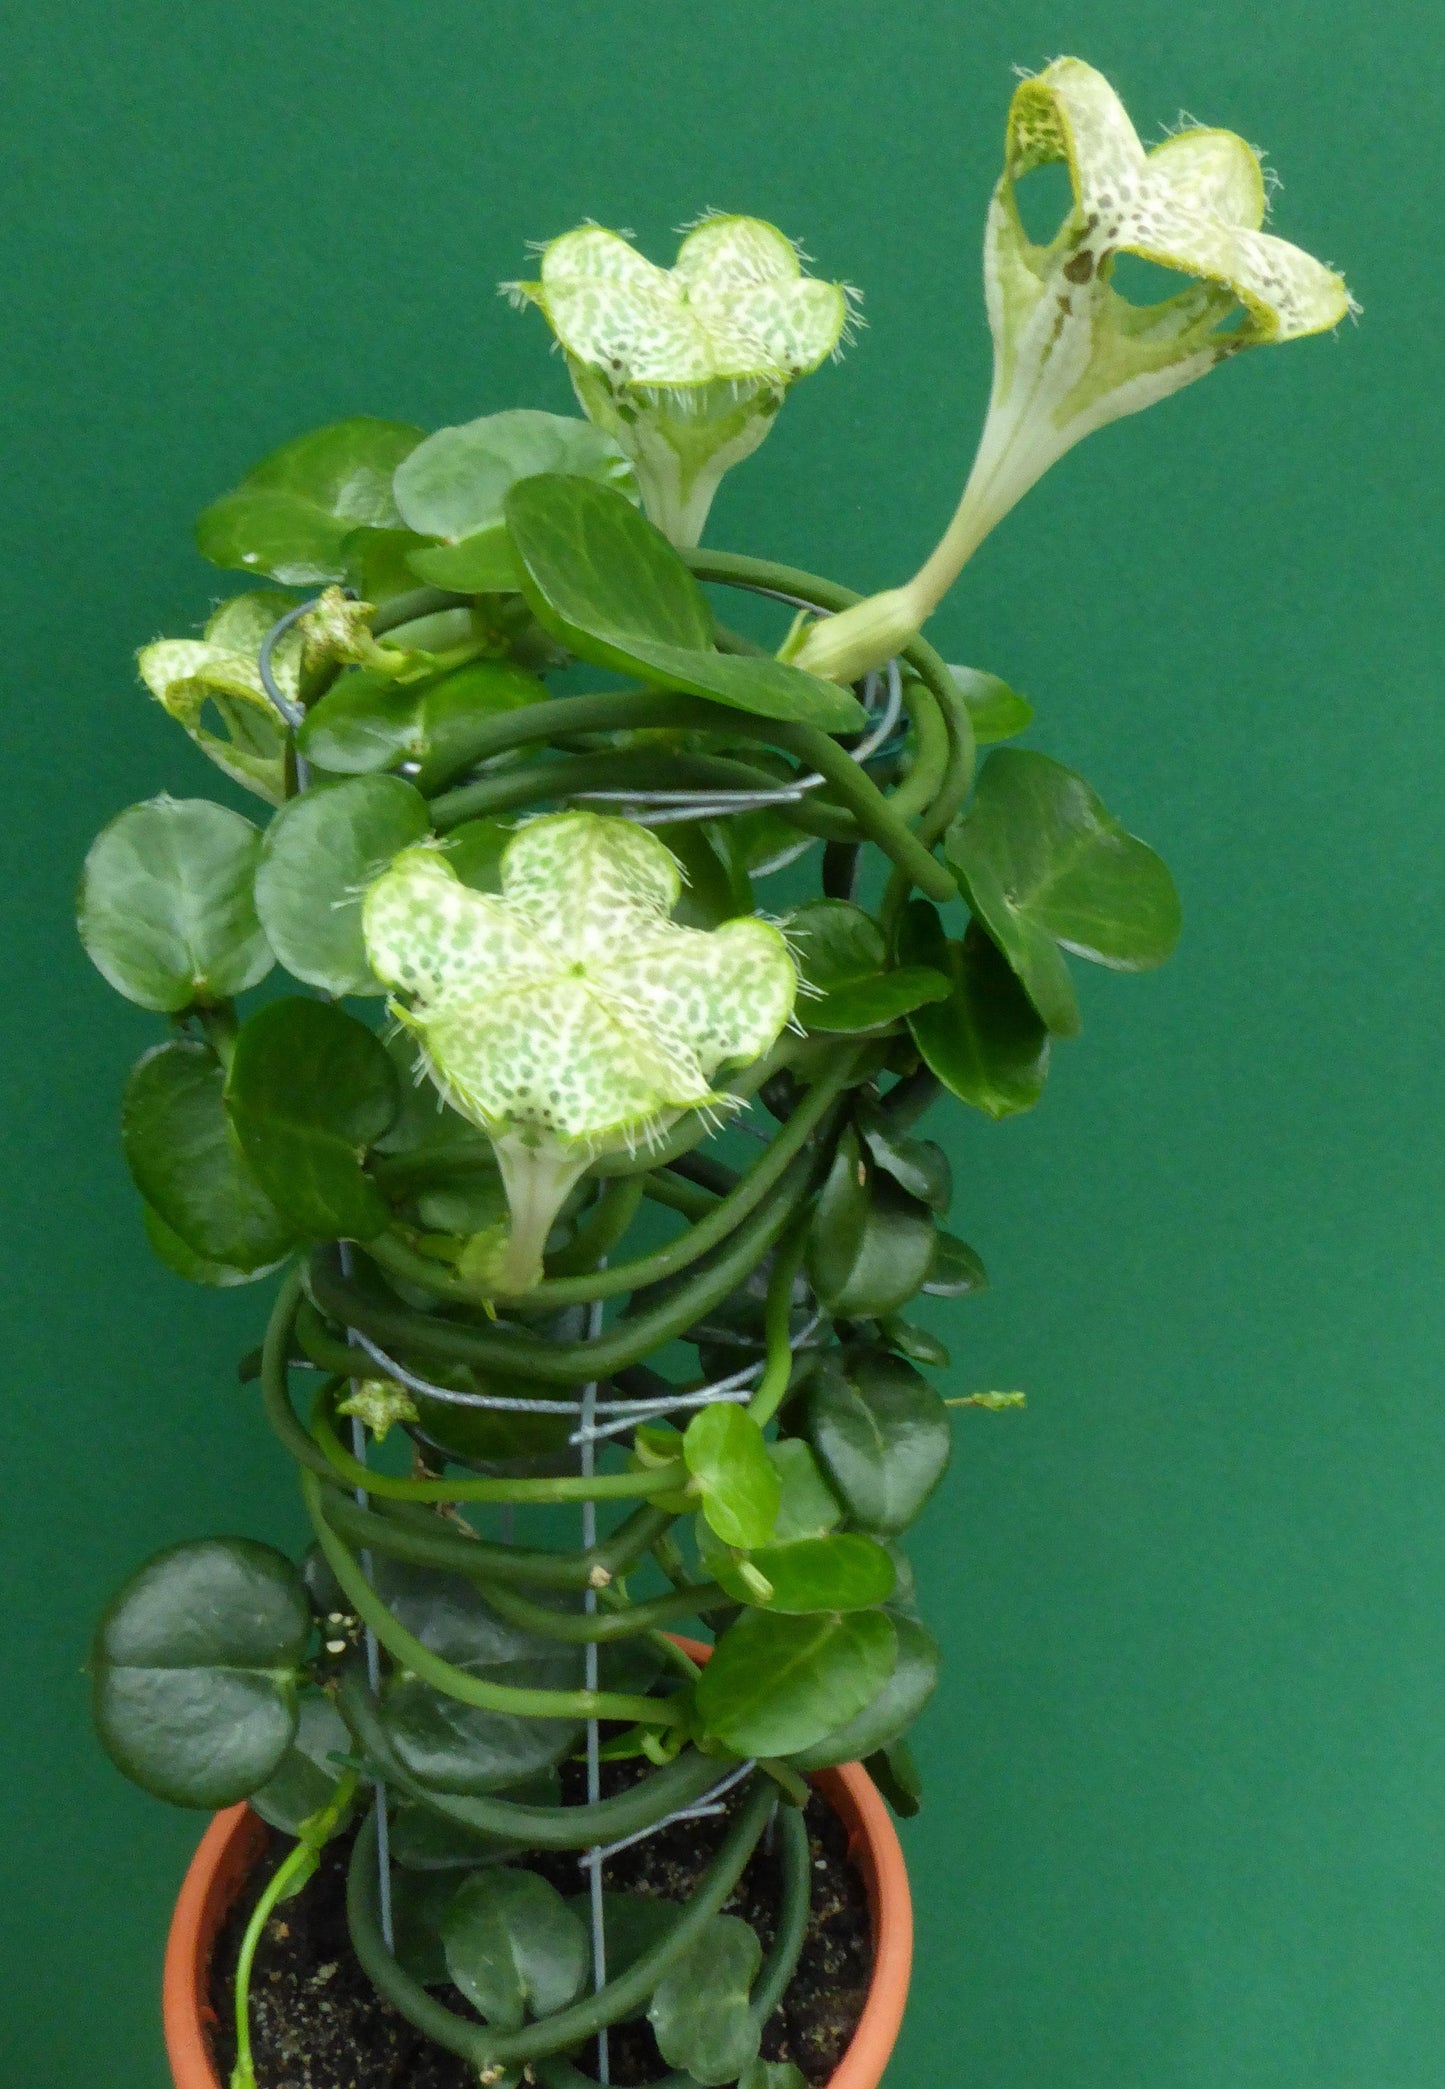 Ceropegia Sandersonii * Parachute Plant * Very Rare Succulent * 3 Seeds * Limited *